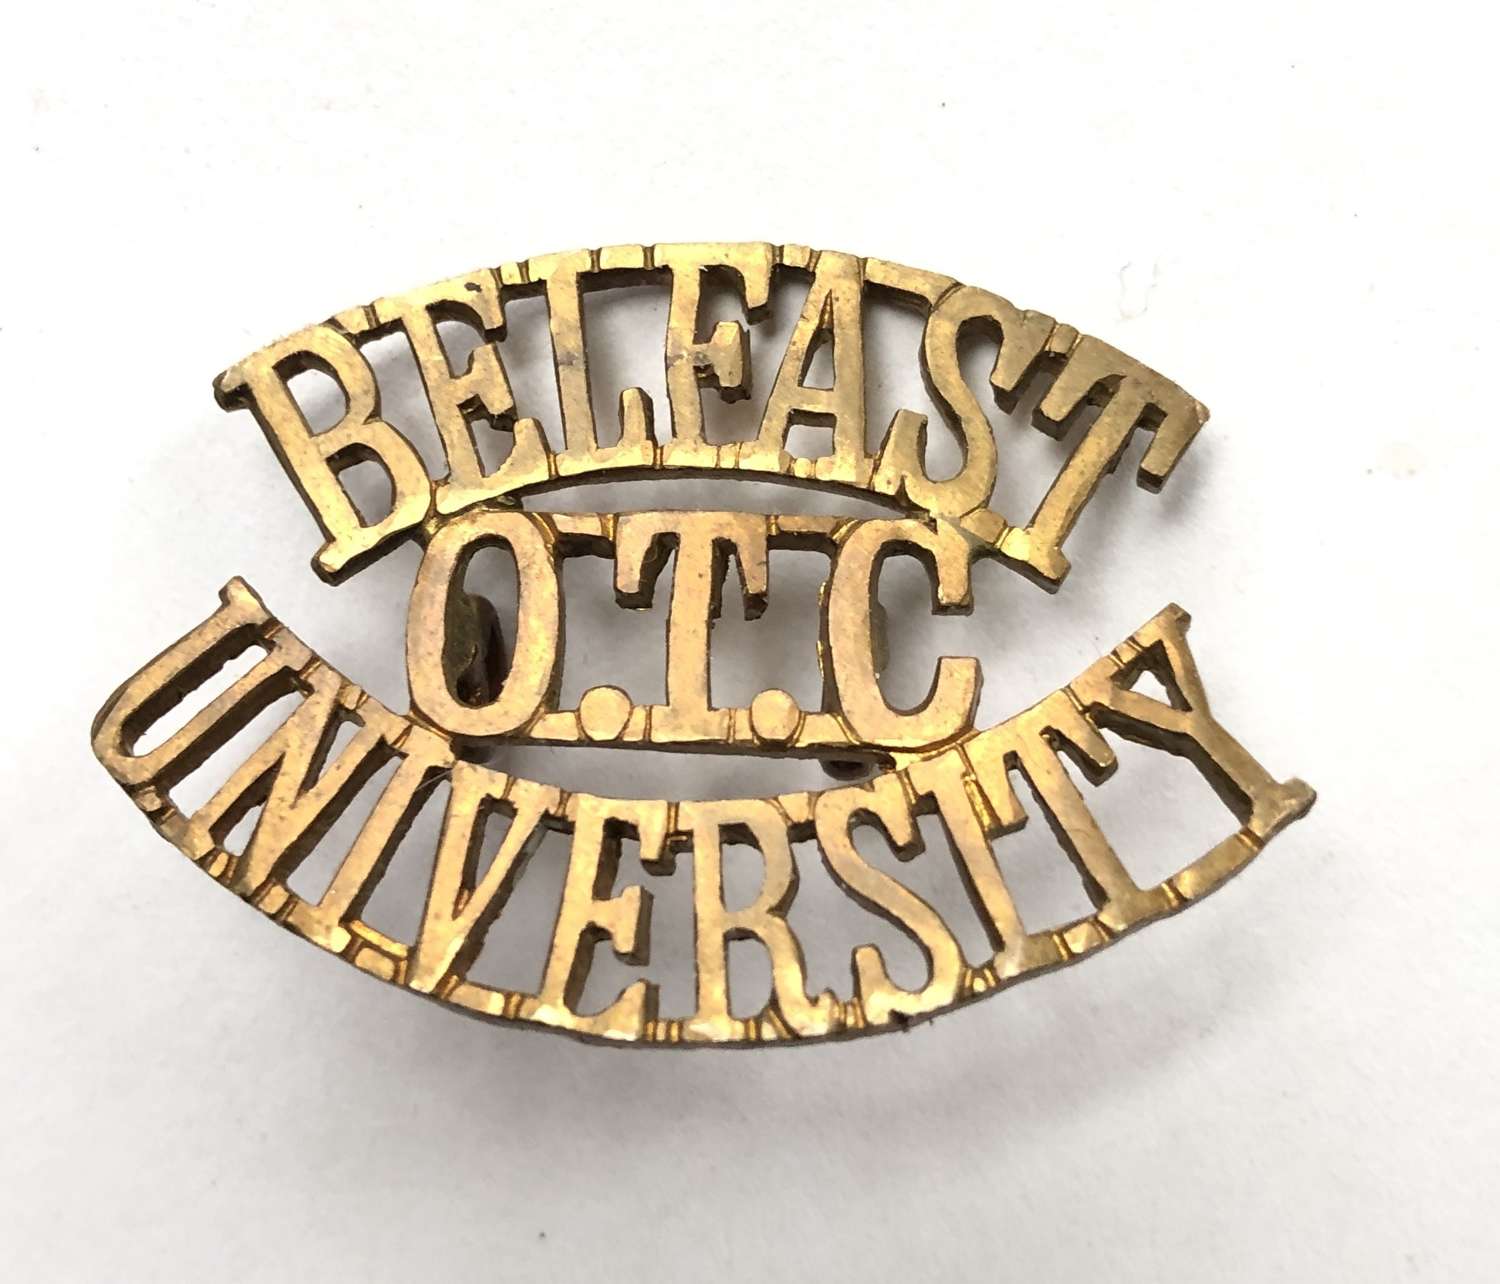 BELFAST / OTC / UNIVERSITY Irish shoulder title